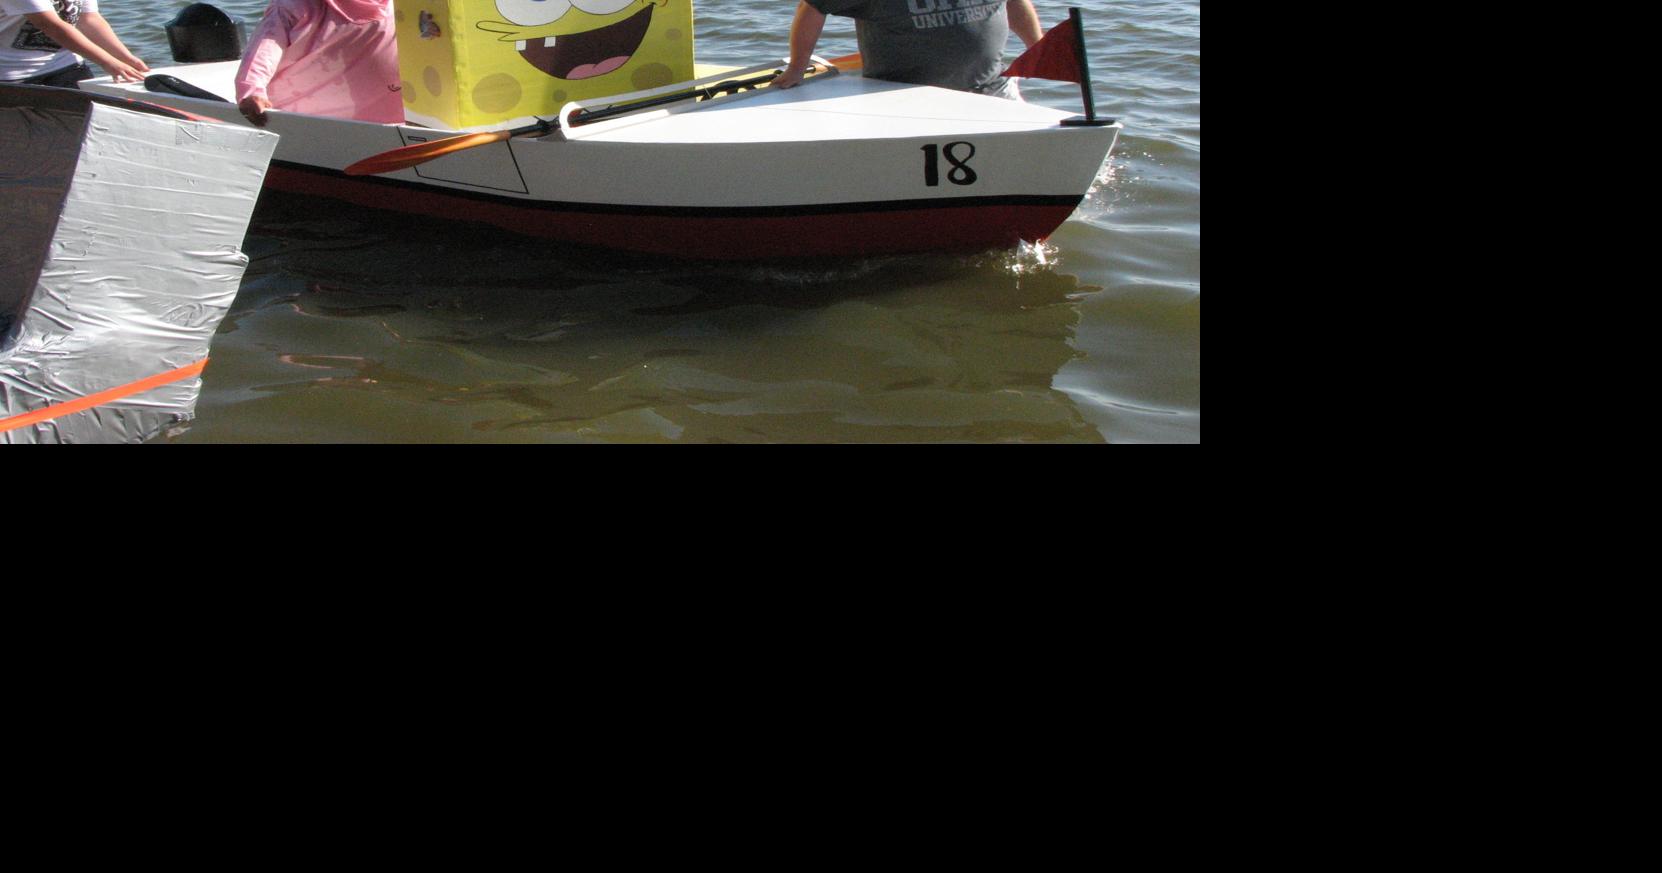 Cardboard boats race in Chippewa Lake